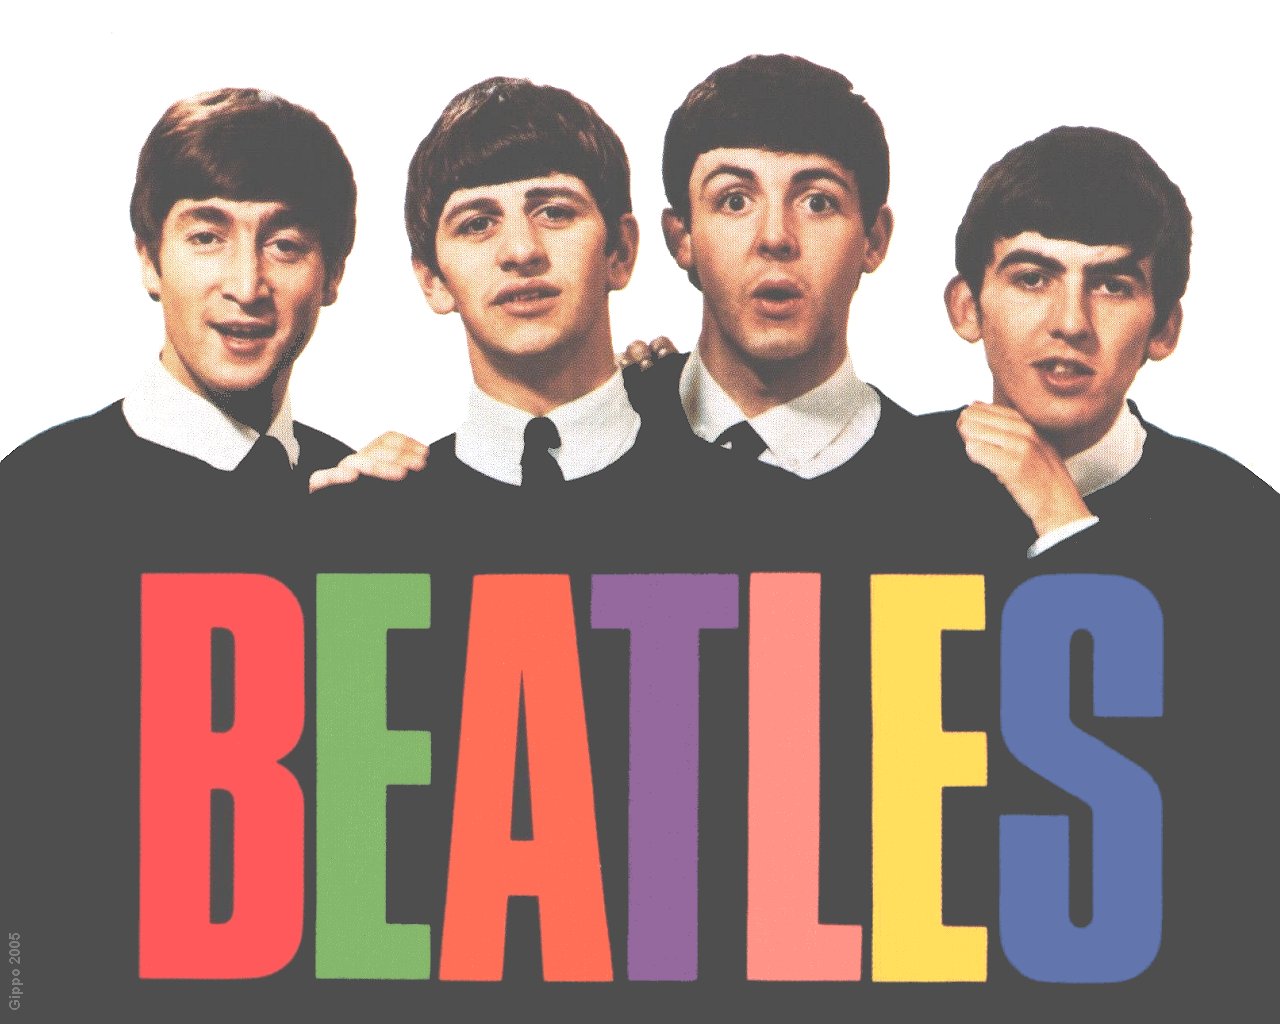 Pop Music The Beatles 1280x1024 Wallpaper Teahub Io